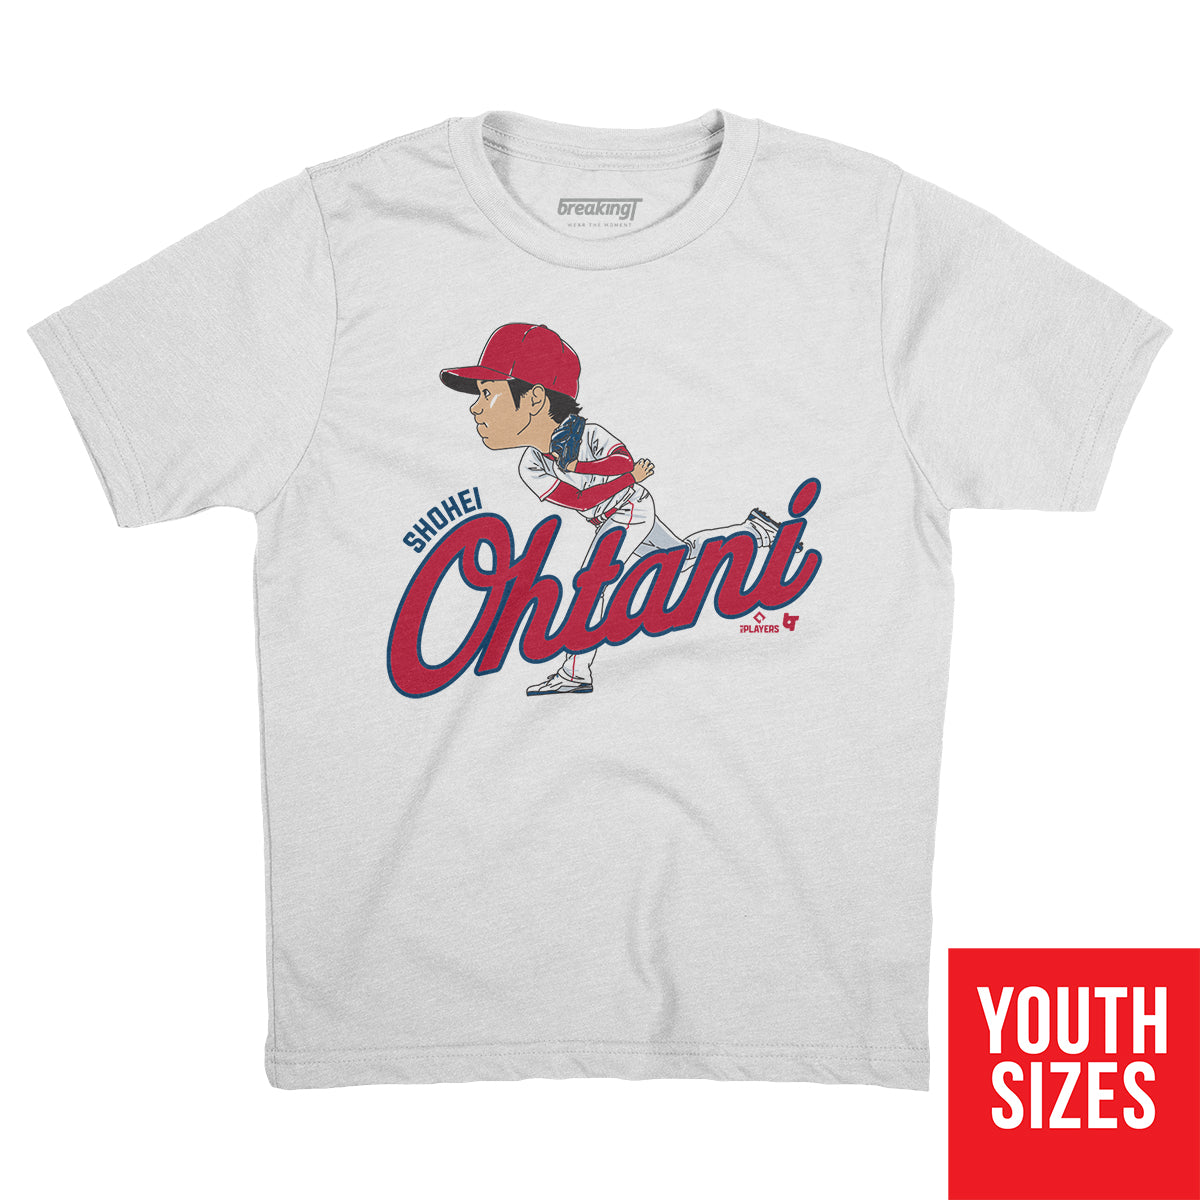 HappyGuyVintage Vintage Jose Canseco Oakland Athletics Caricature Baseball Tshirt - Vintage Baseball Tshirt - Vintage Cartoon Tshirt (Medium)